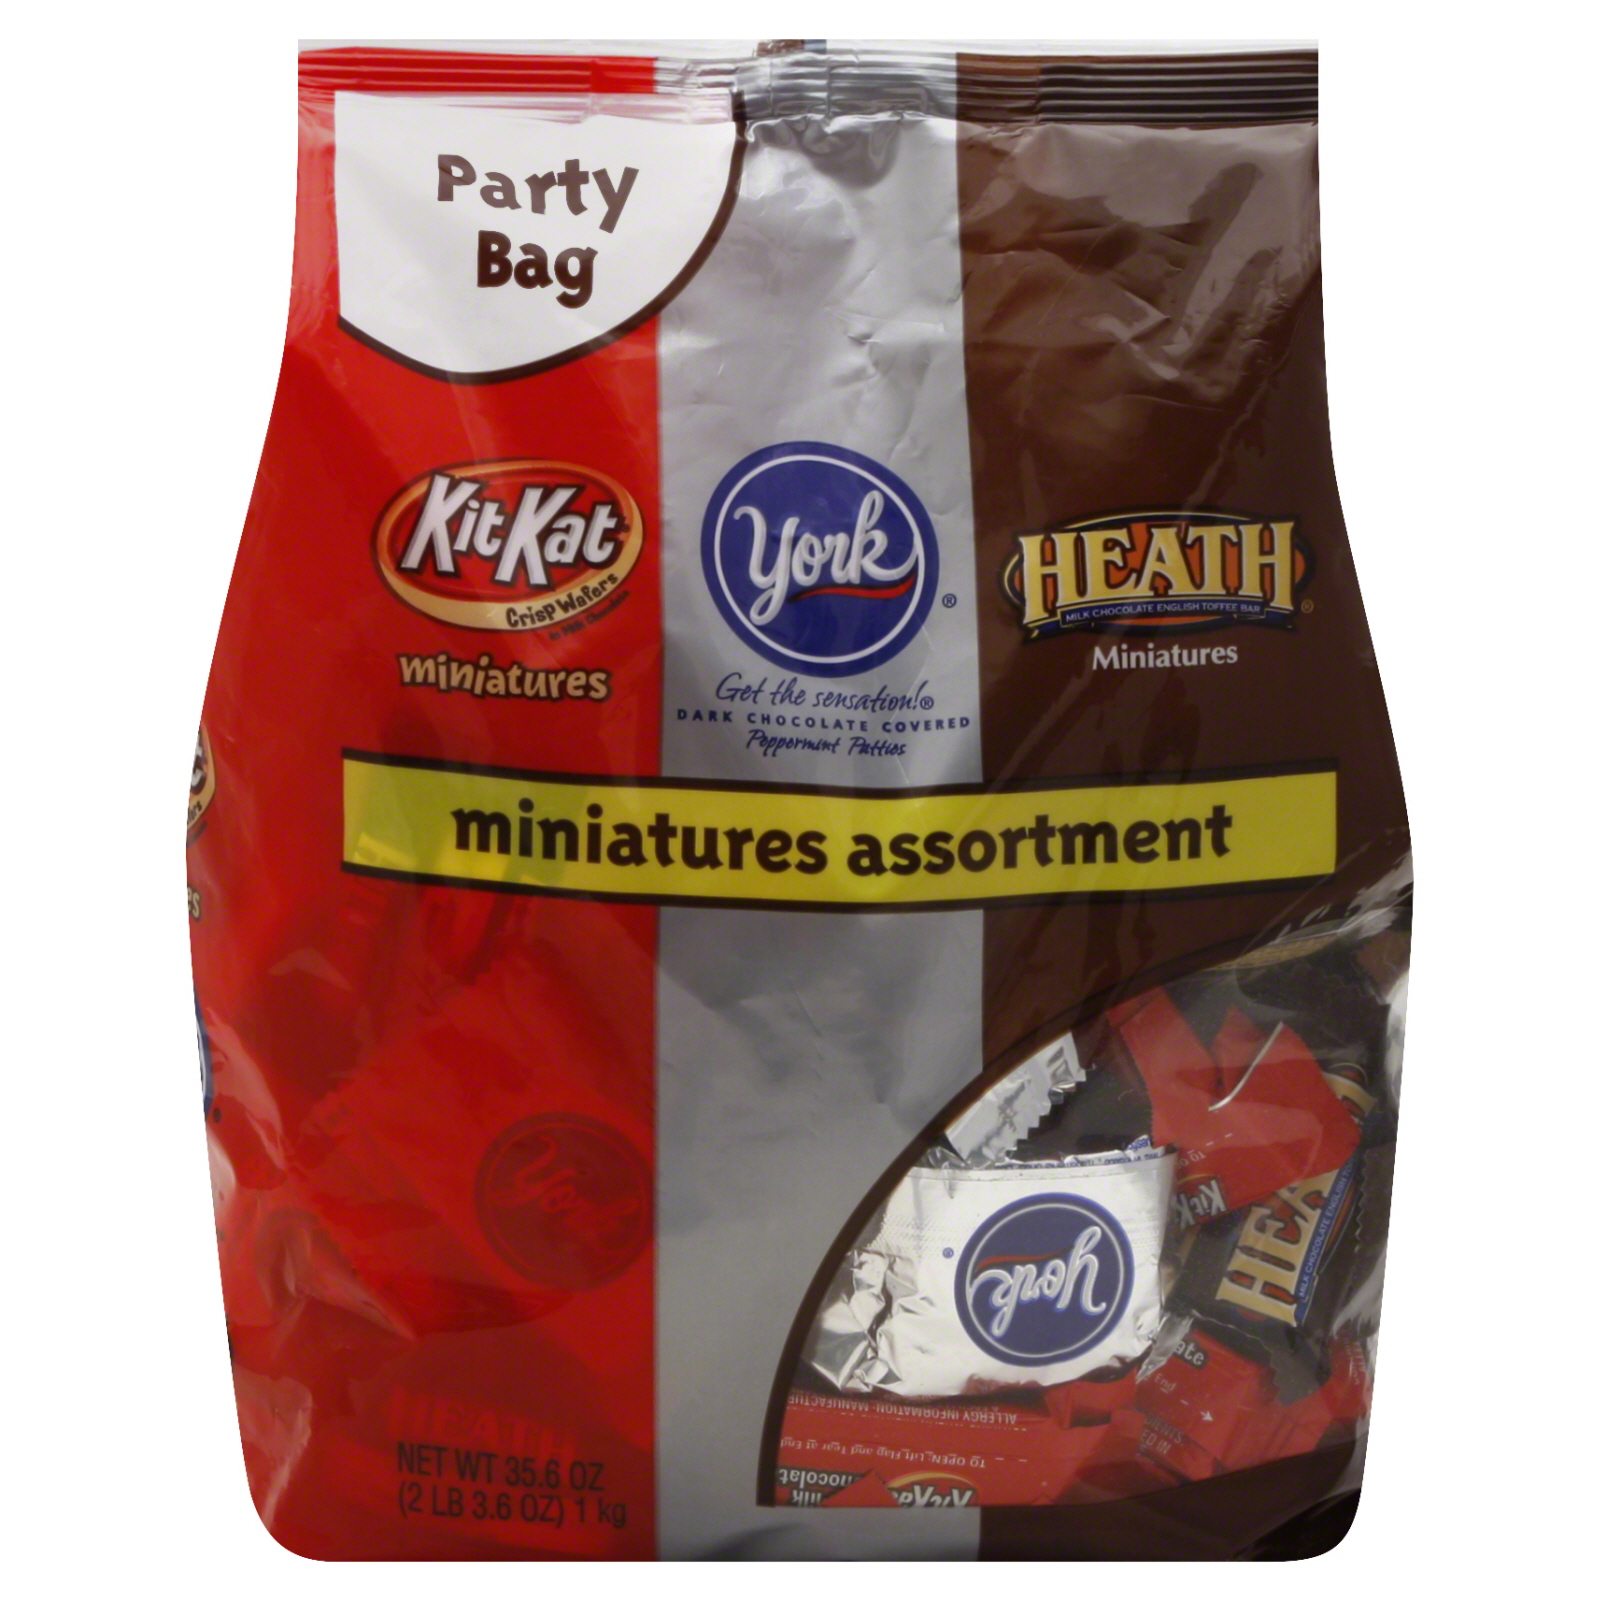 Hershey's Kit Kat York Assortment Bag, 35.6 oz (2 lb 3.6 oz)